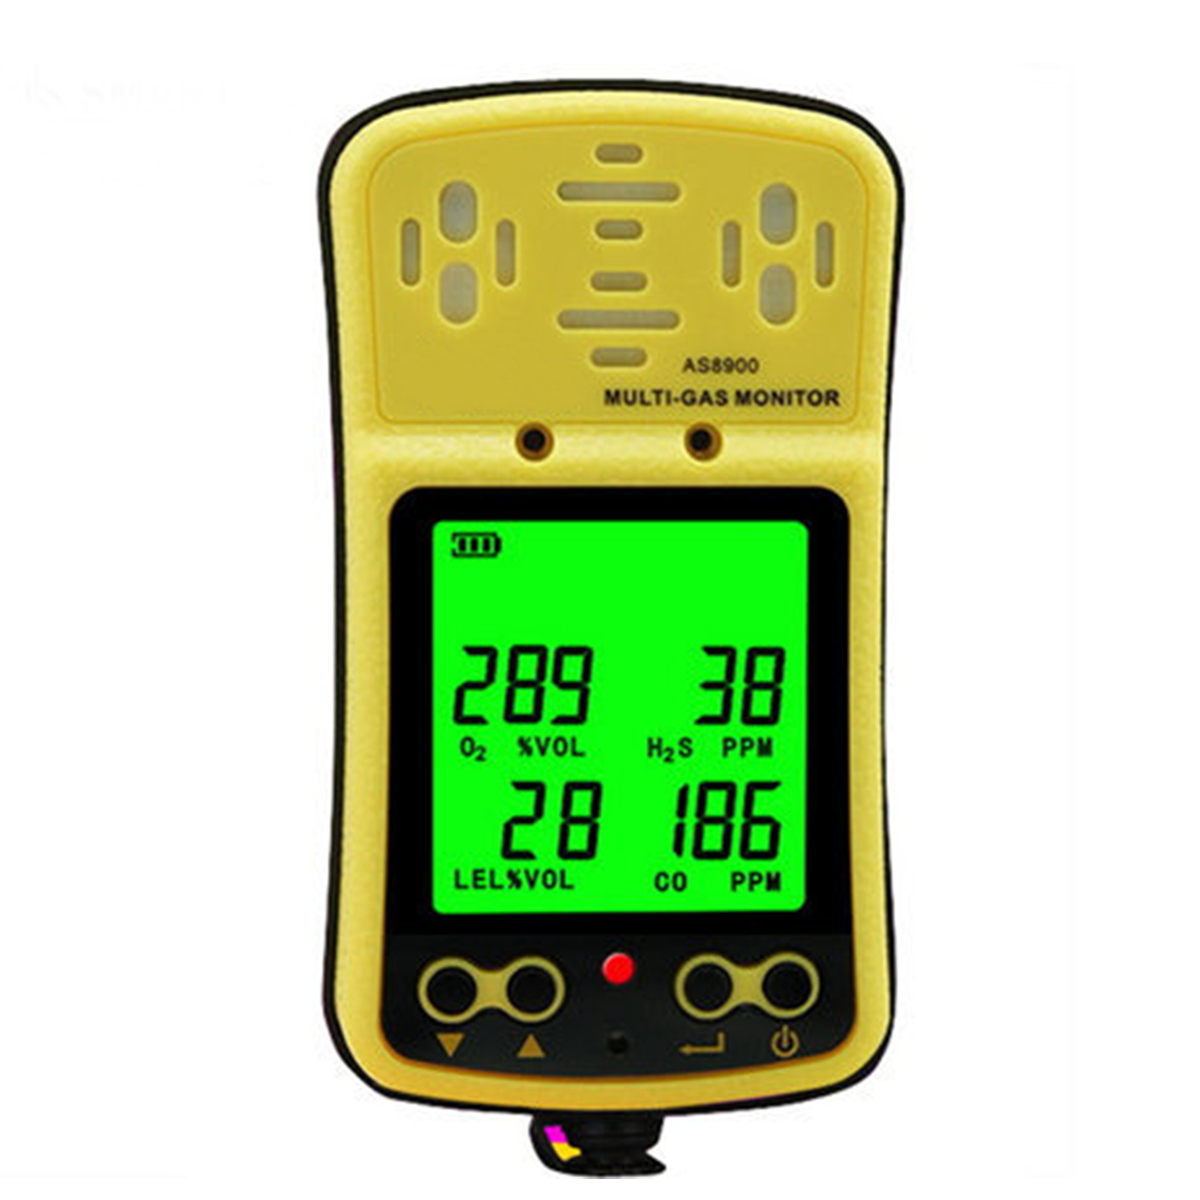 Multi-Gas-Monitor-Handheld-Gas-Detector-4-in-1-Gas-Analyzer-AS8900-1375769